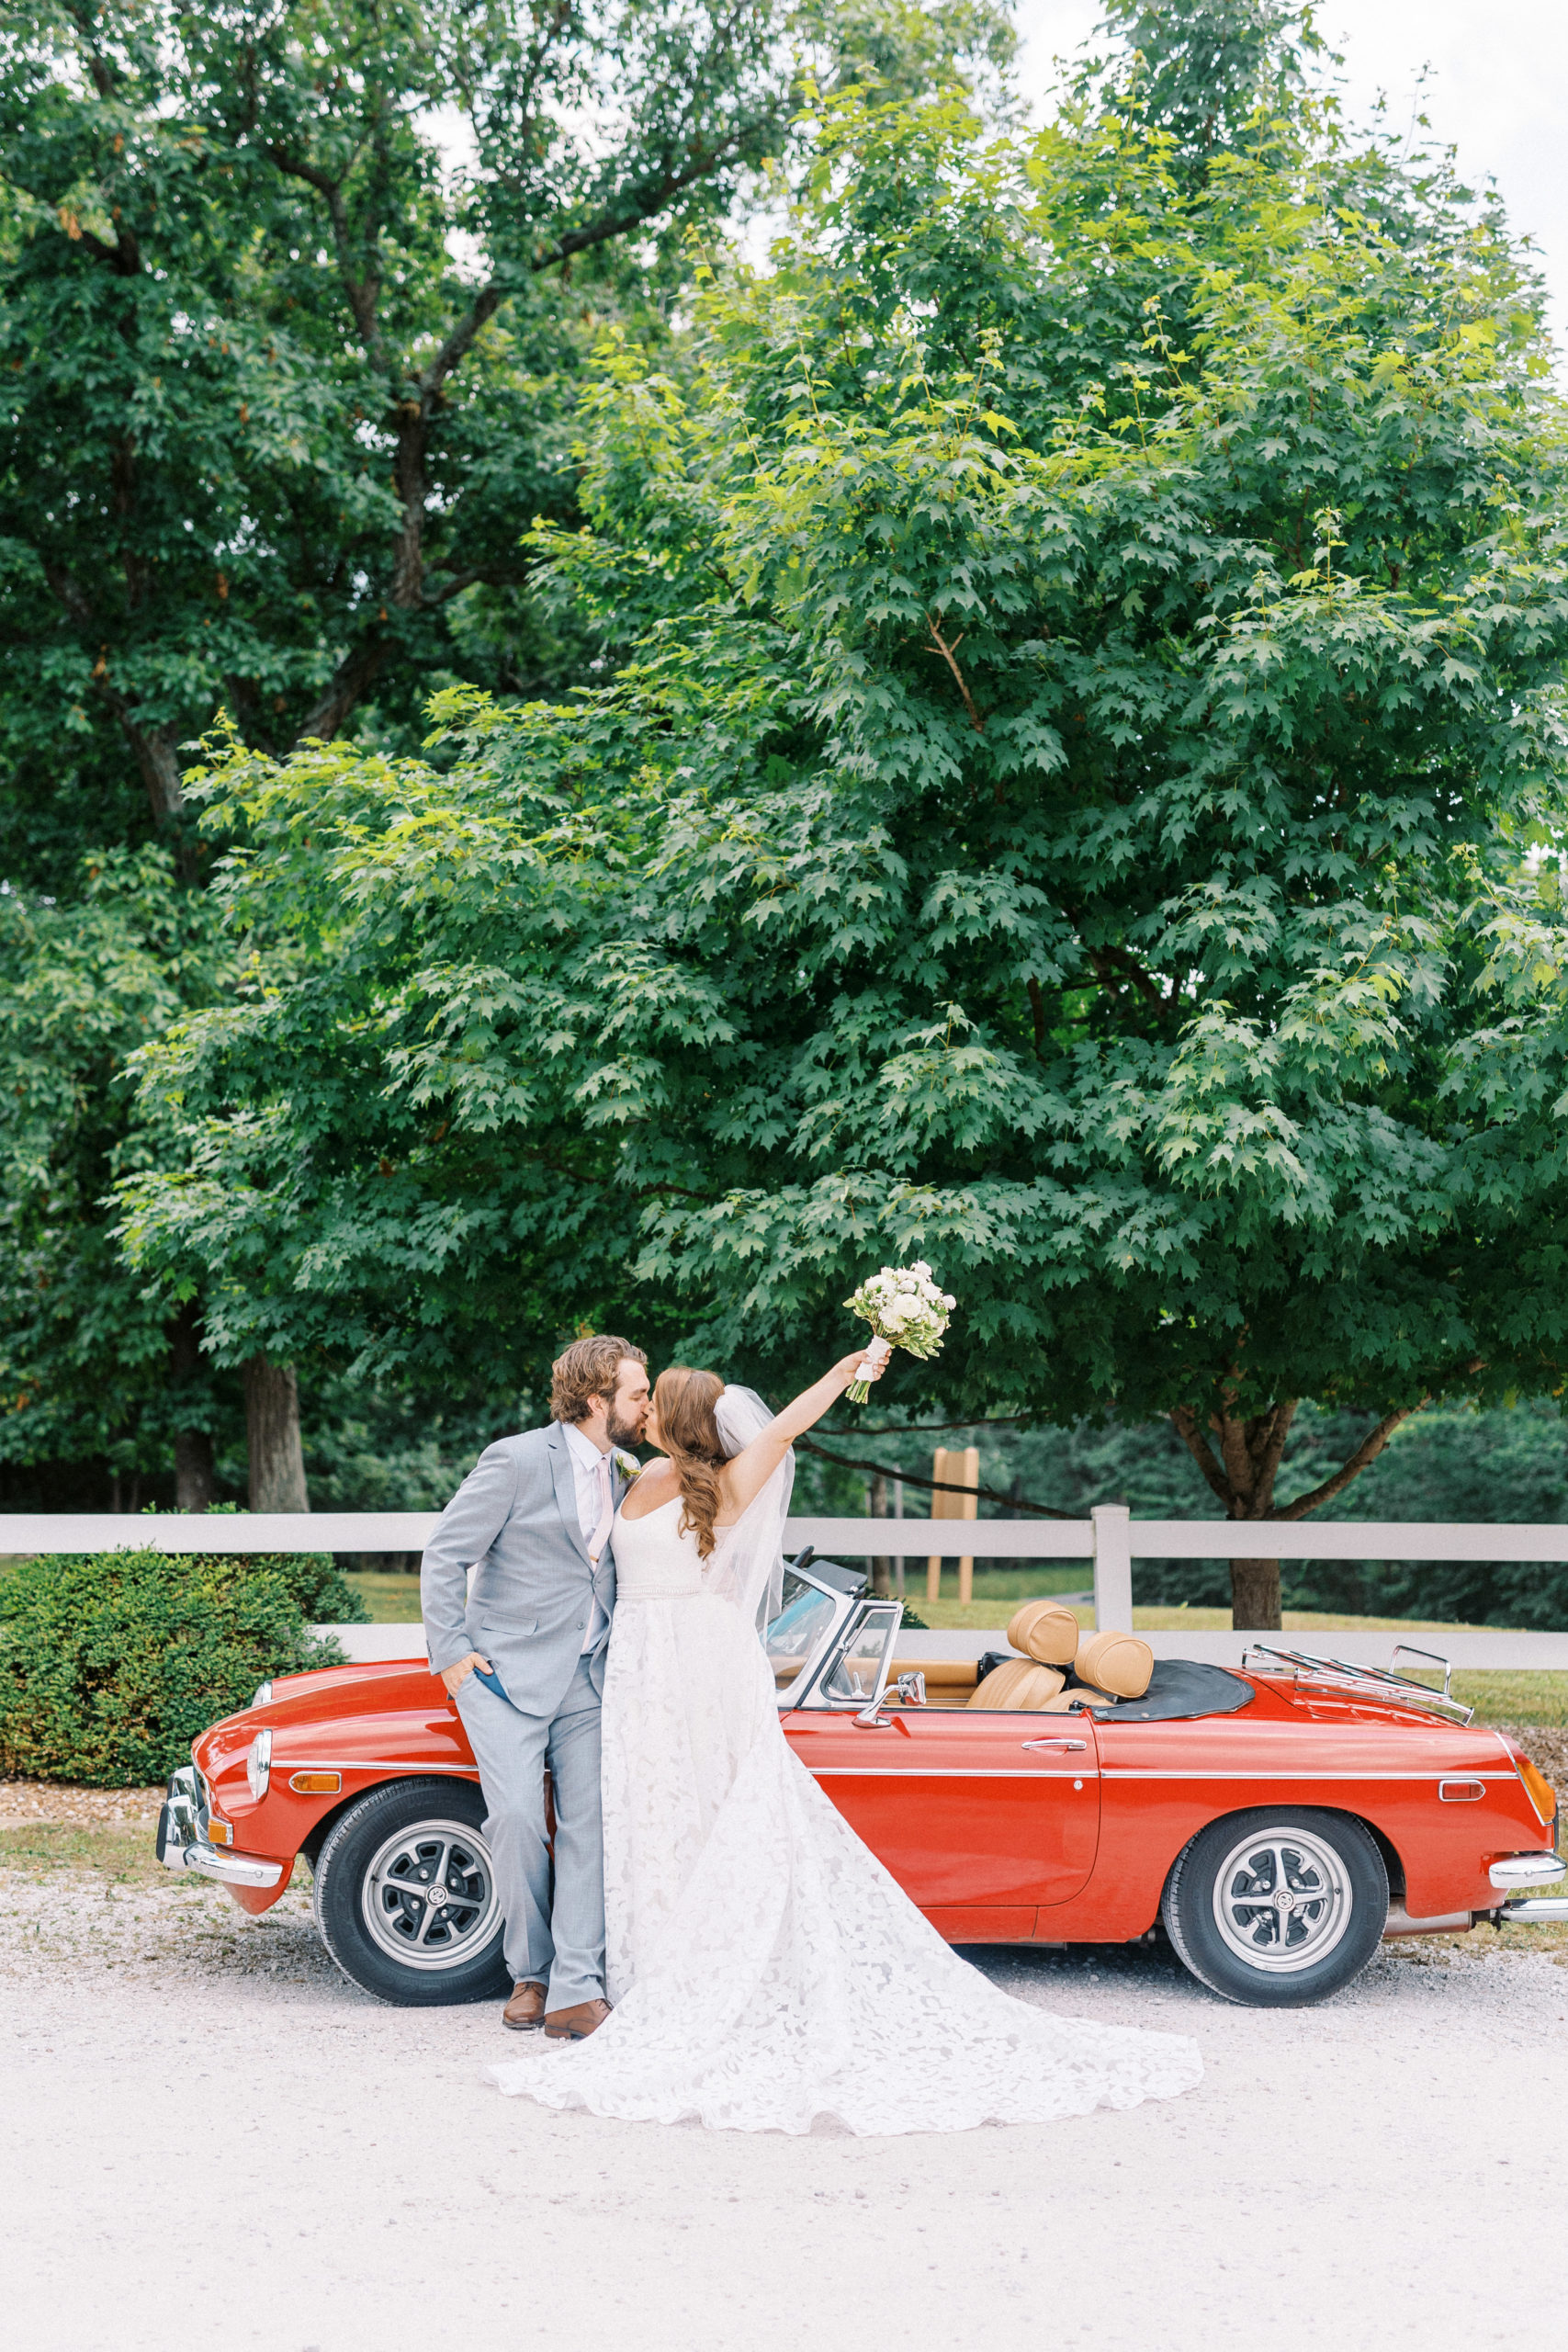 Innsbrook MO wedding photos with vintage getaway car